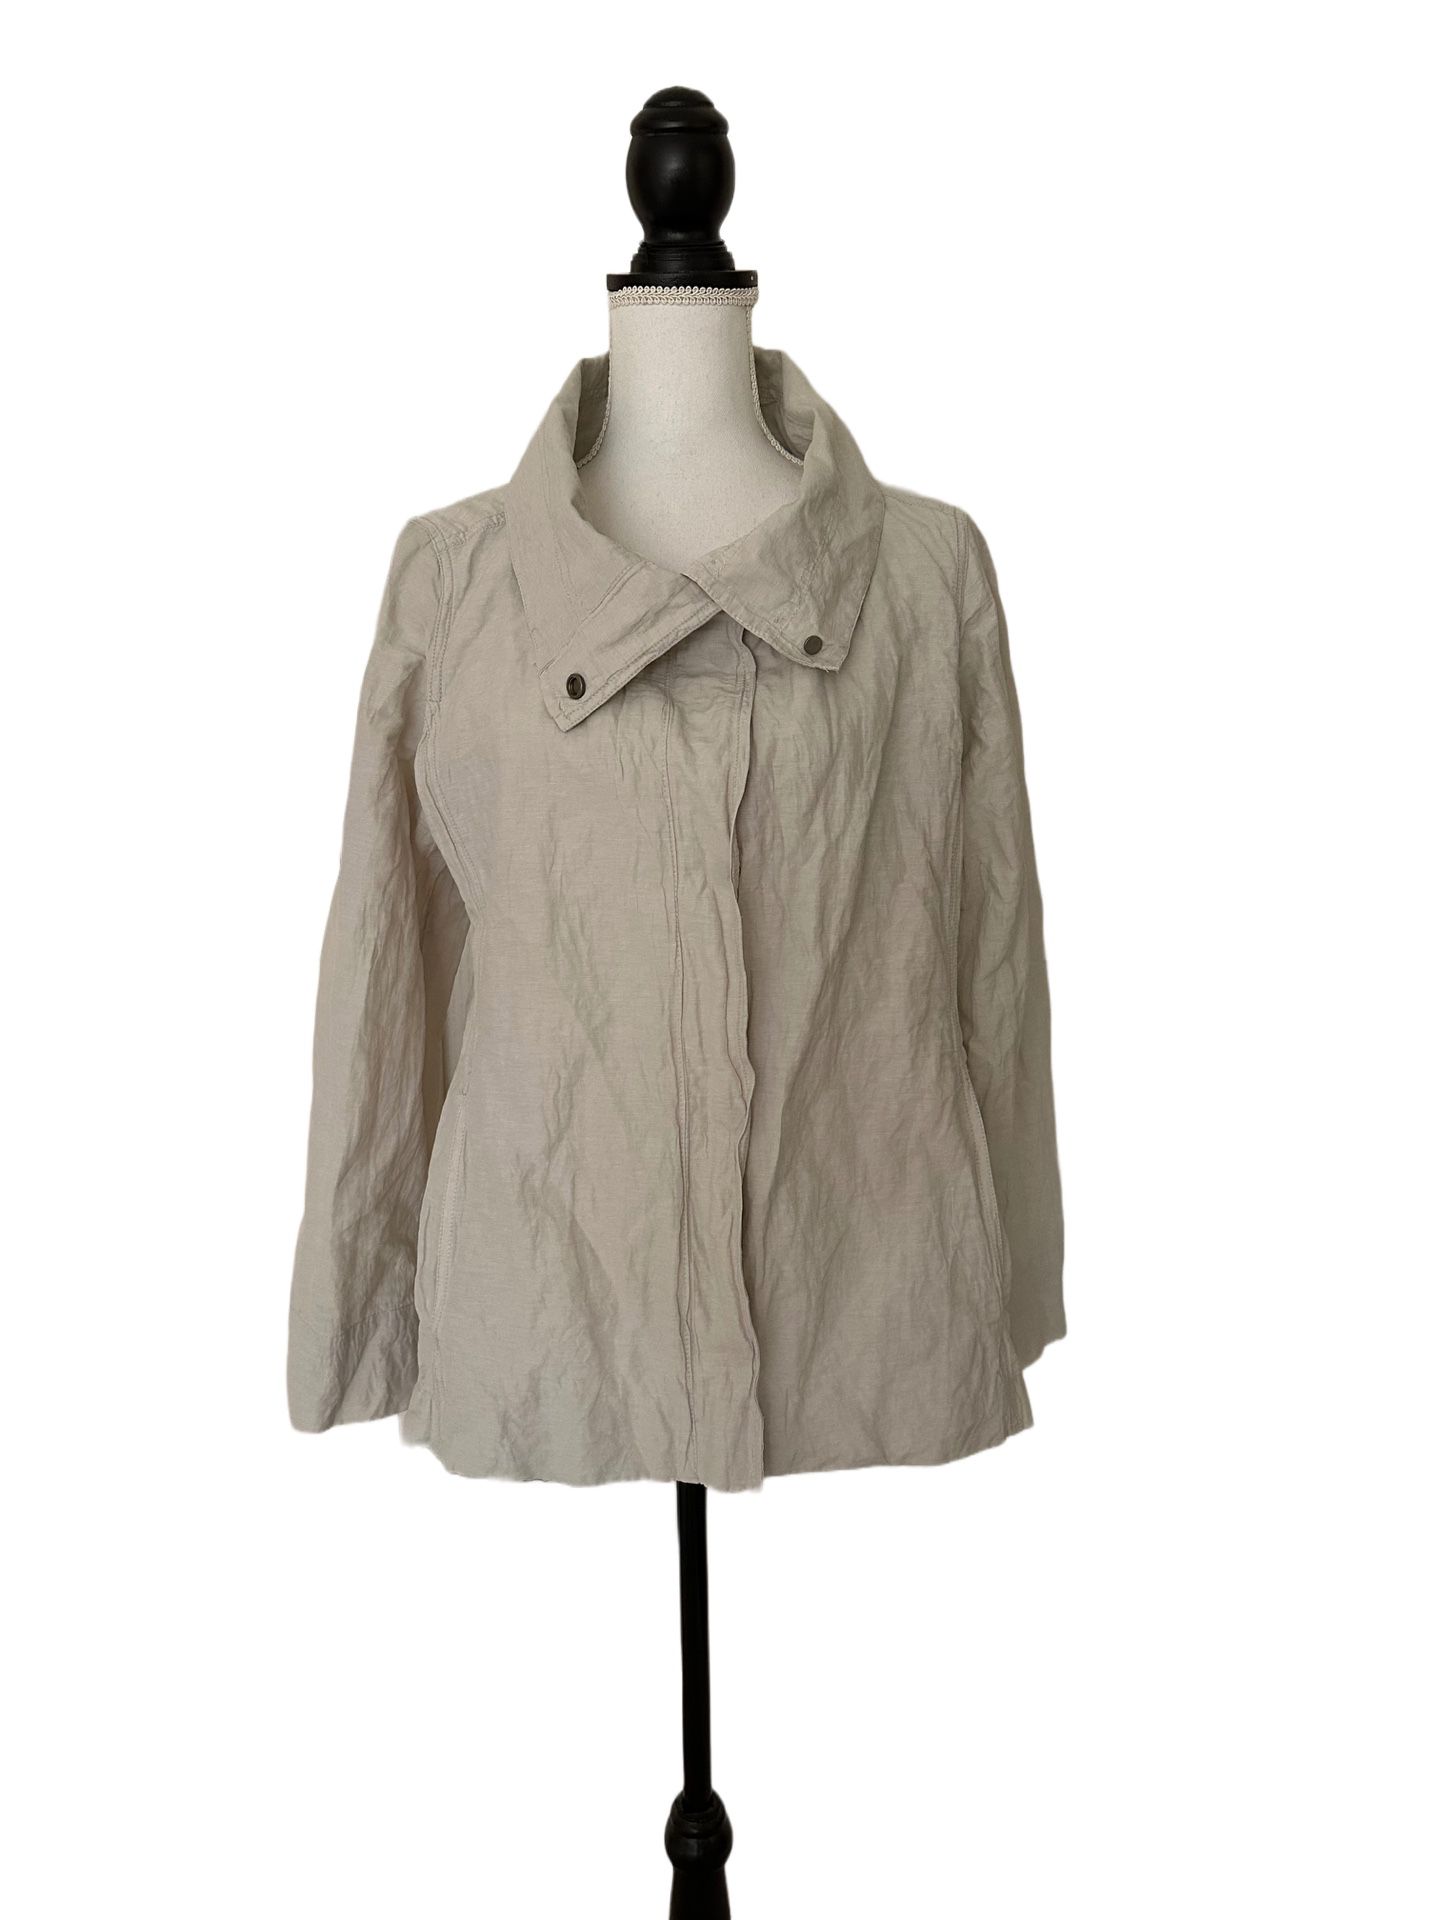 New Eileen Fisher Woman’s Ivory Light Jacket, Organic Cotton Jacket, Sz S